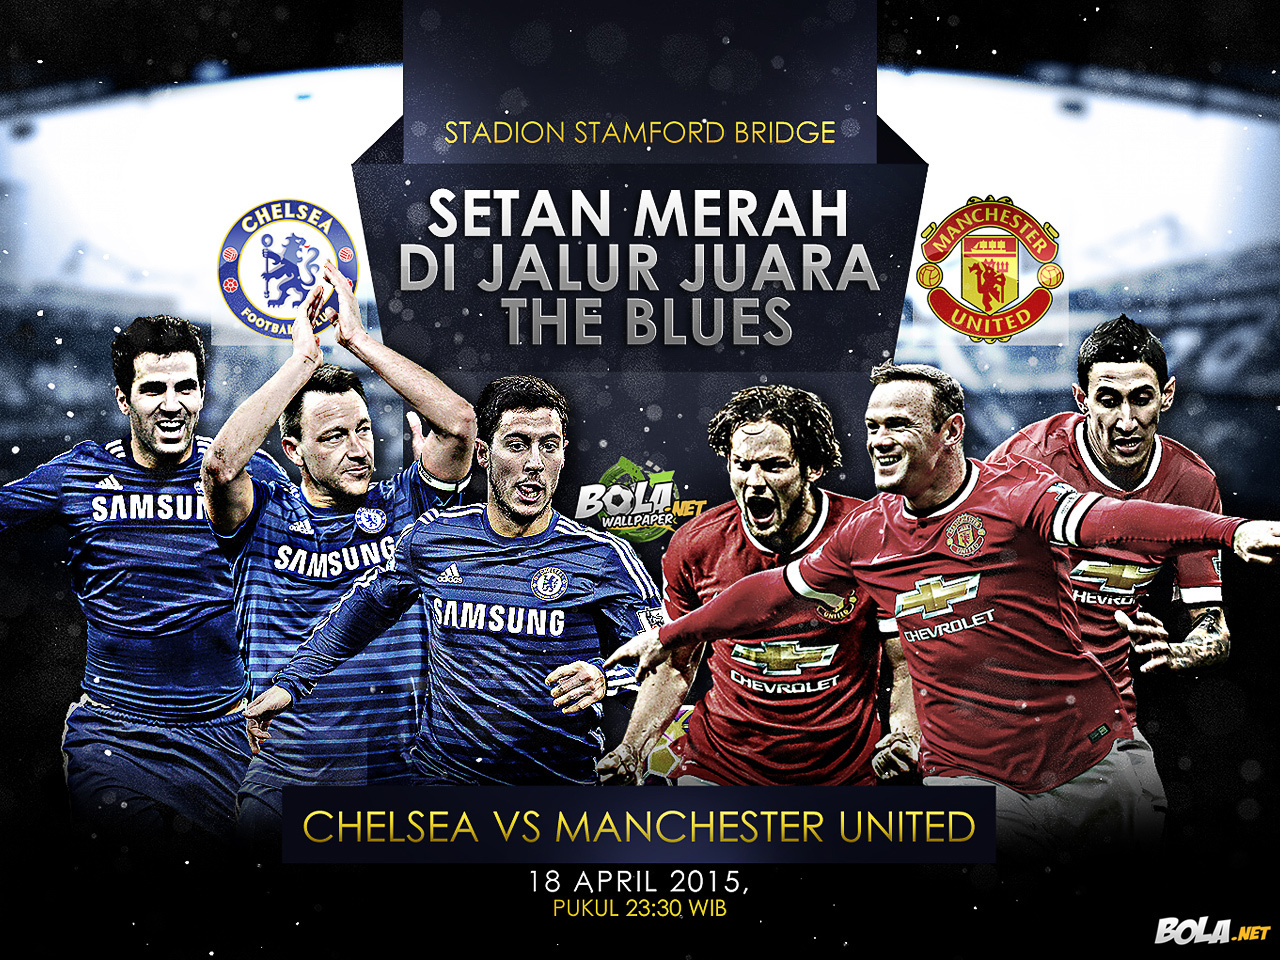 Download Wallpaper - Chelsea vs Manchester United - Bola.net